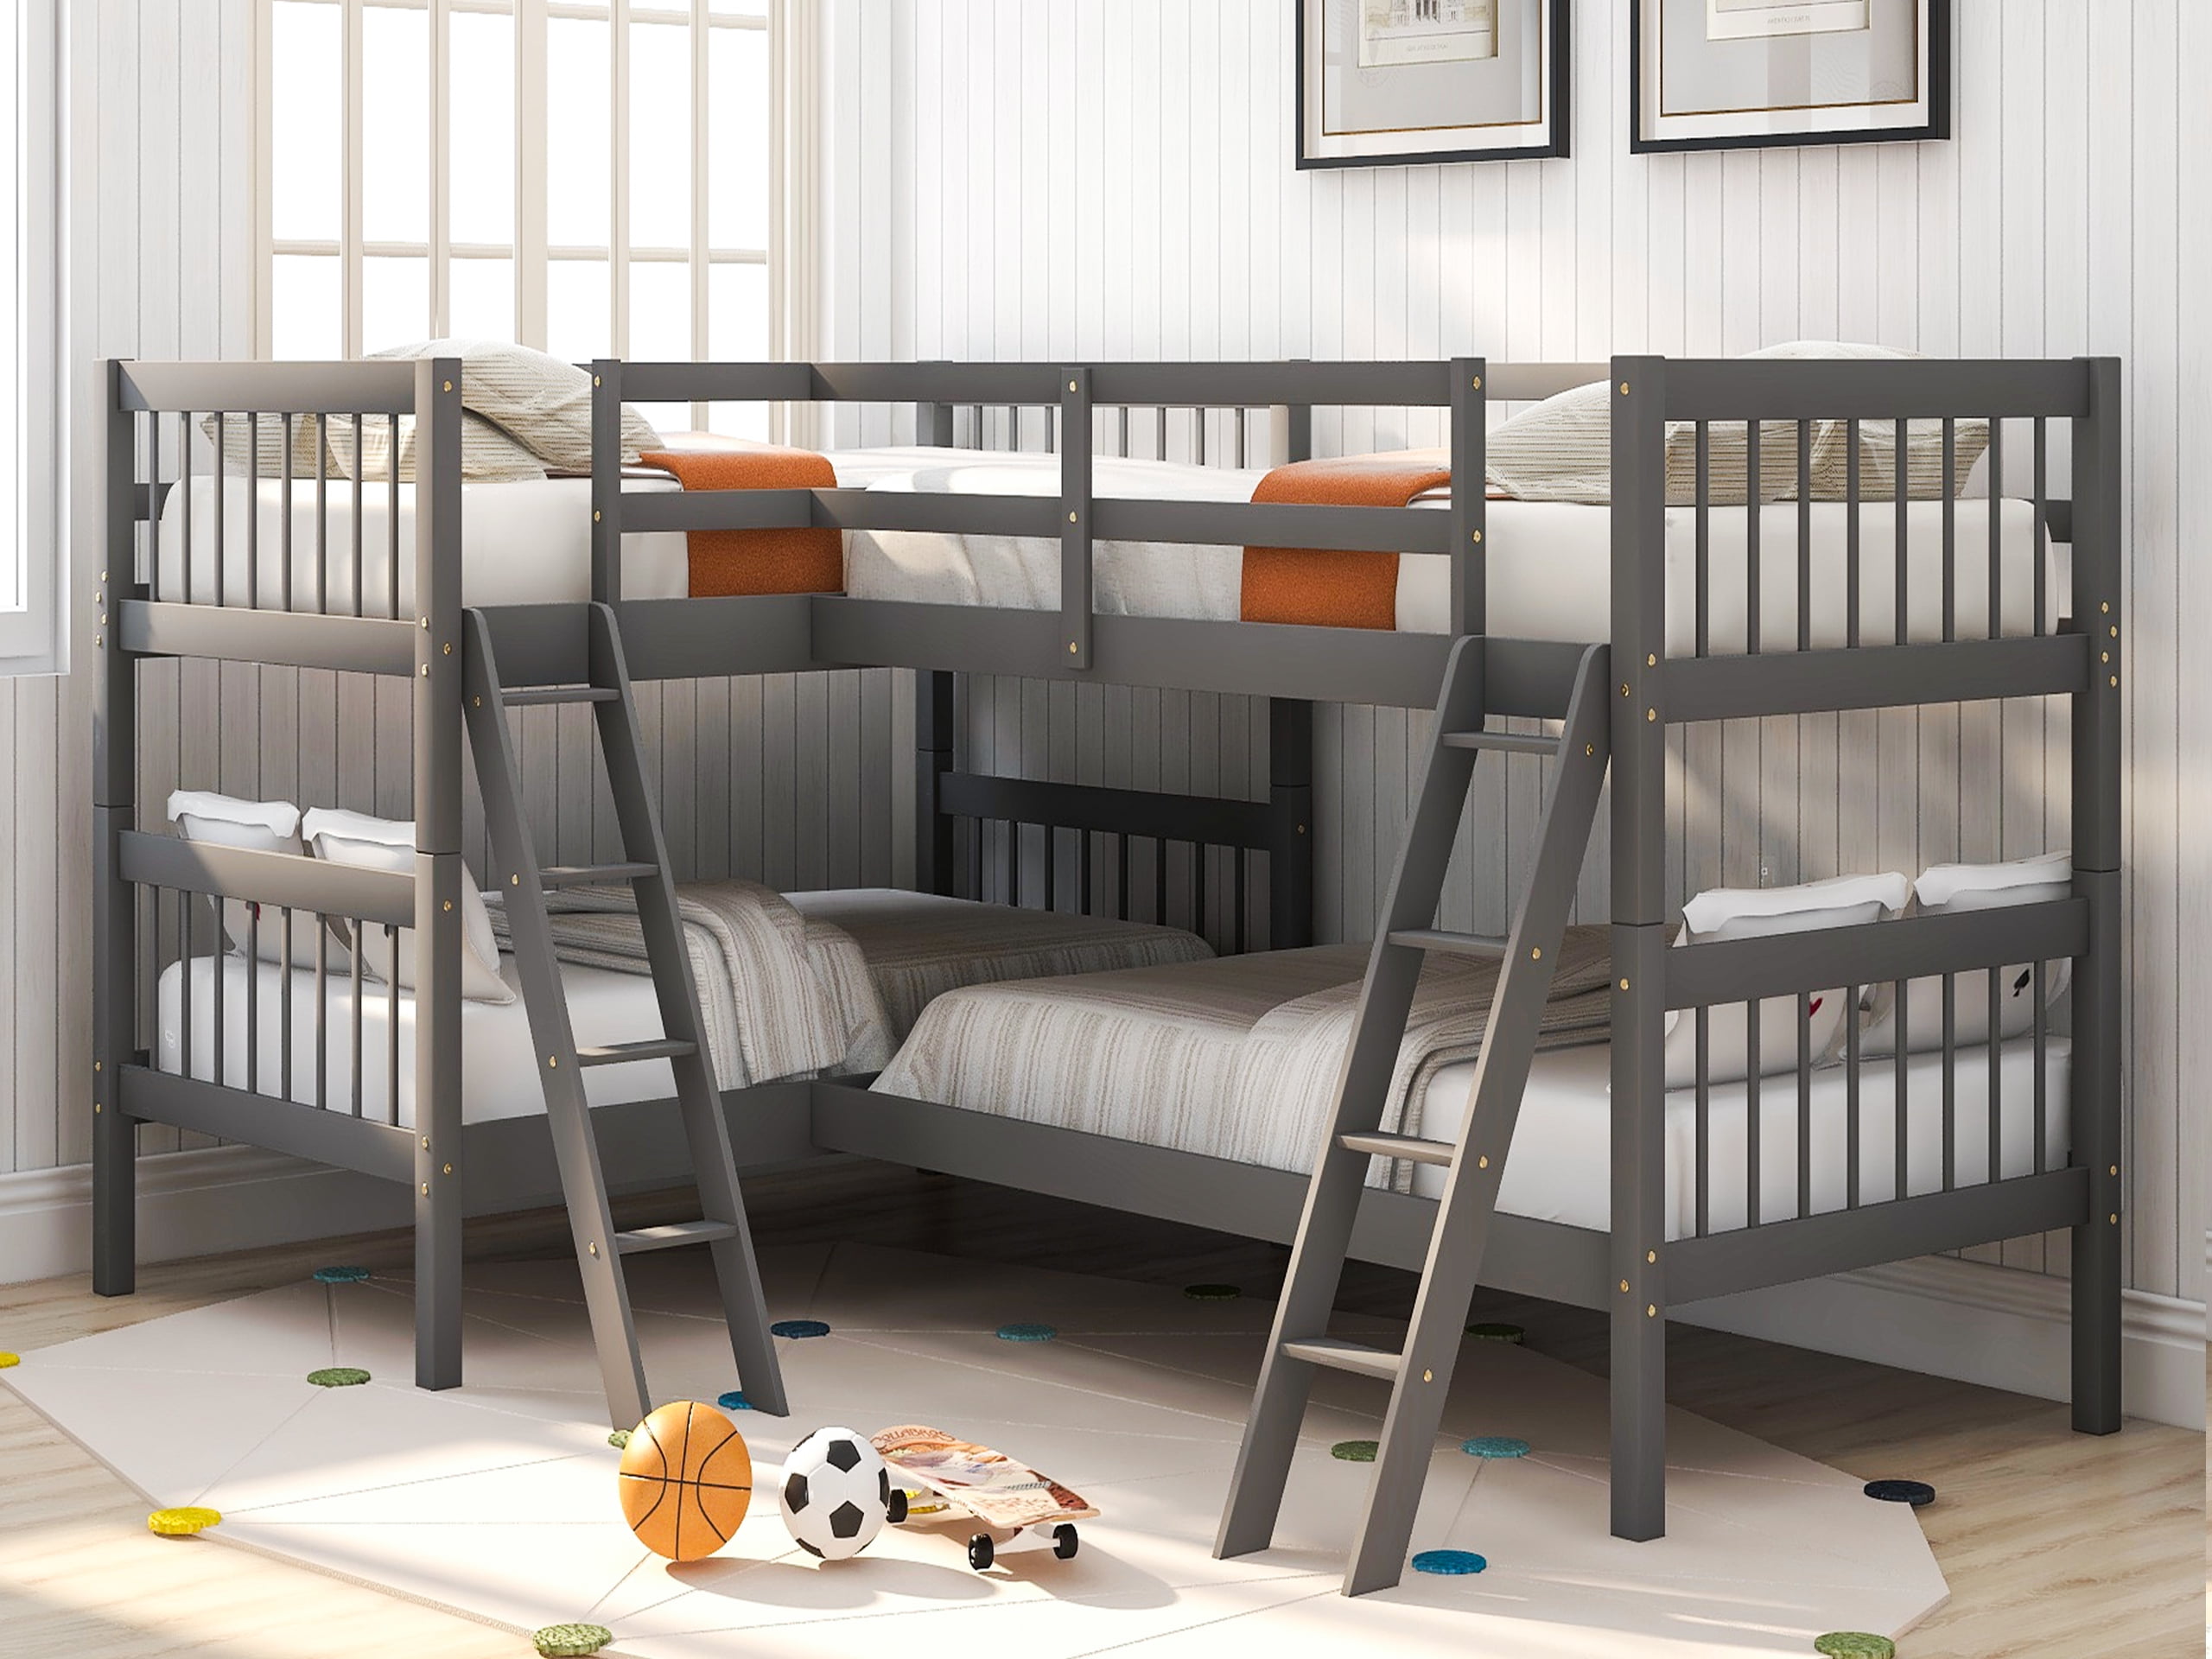 L Shaped Bunk Bed Twin Size Four Kids, Art Van Furniture Bunk Beds